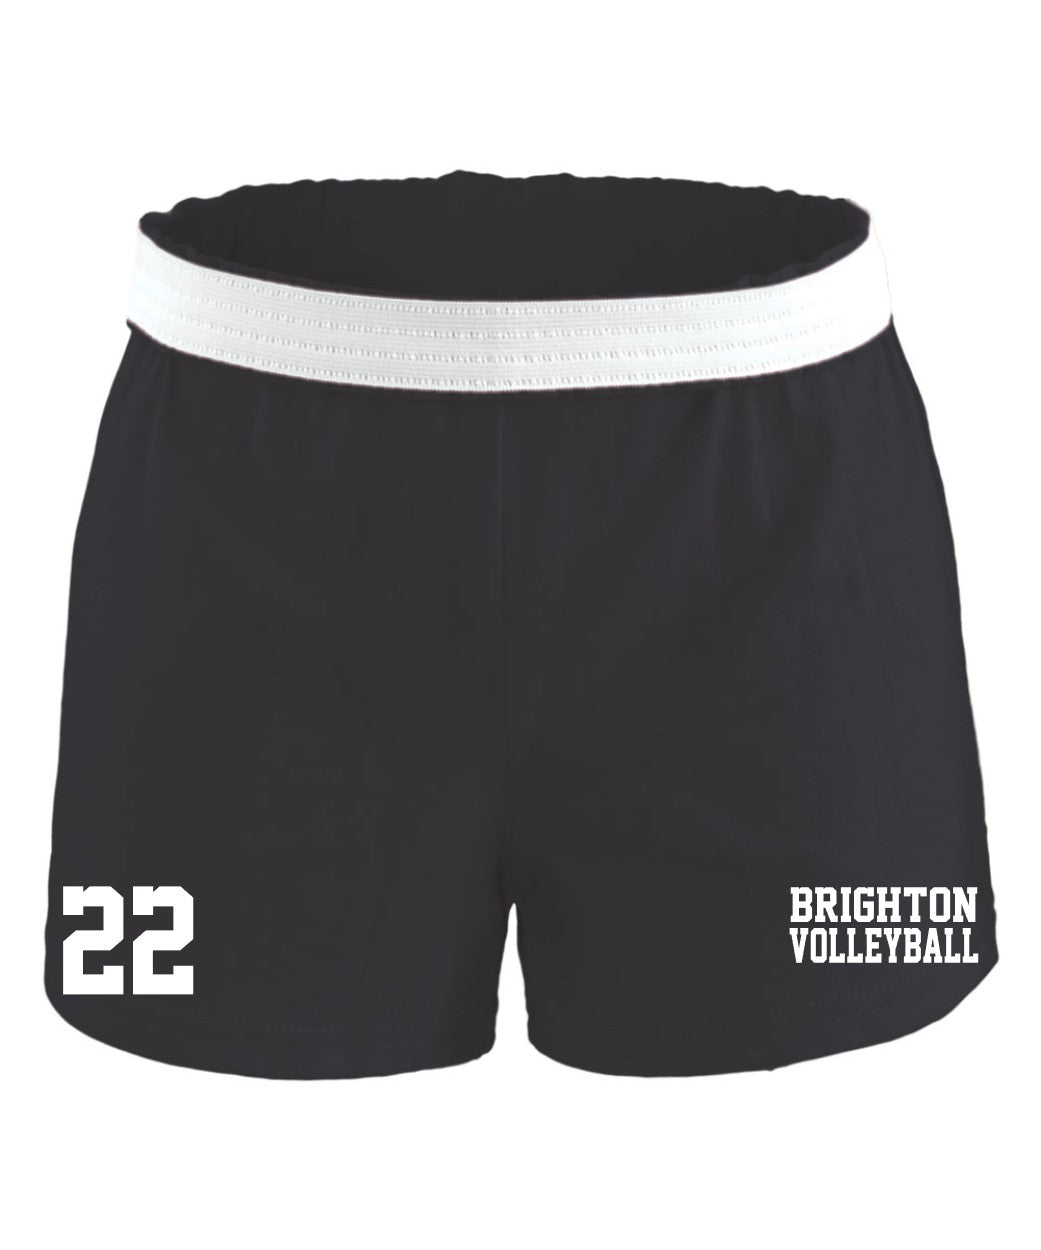 Brighton Volleyball Knit Shorts